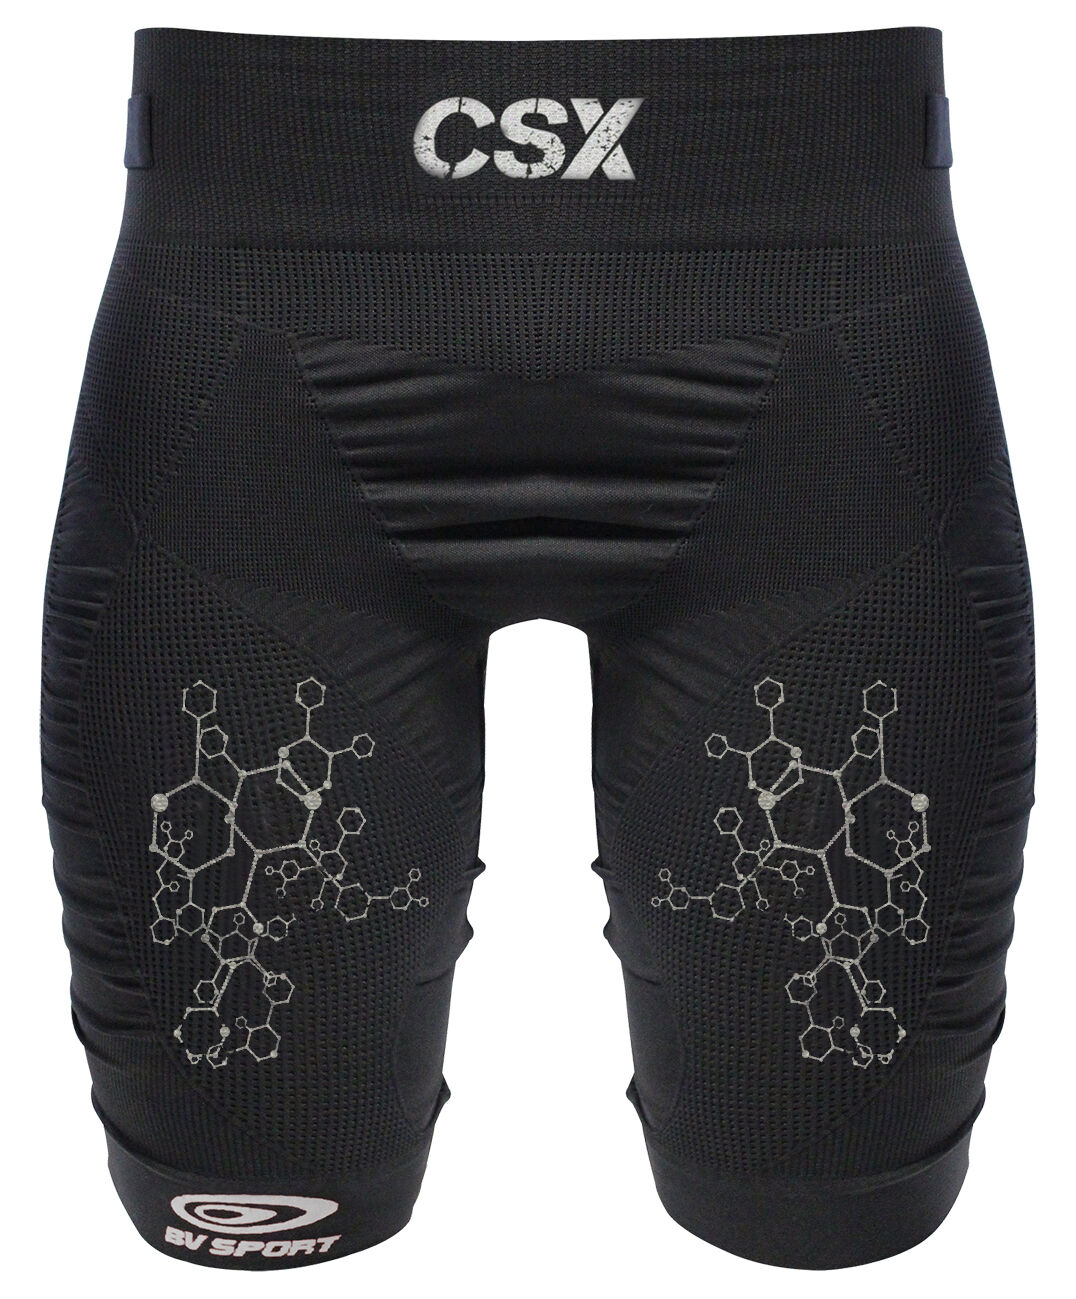 BV Sport - CSX Pro - Pantalón corto running - Hombre